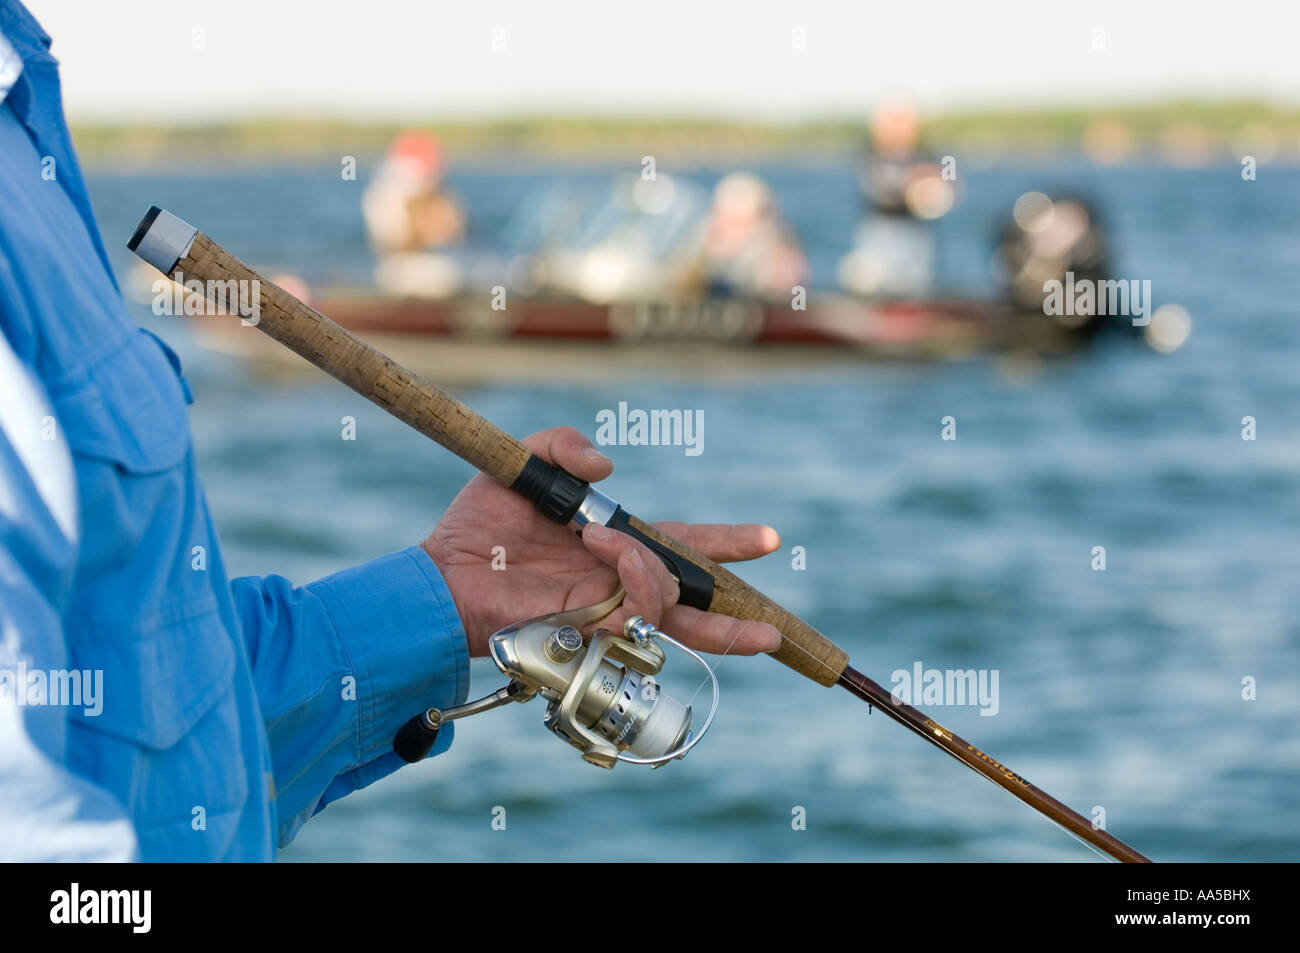 Angler holds abu garcia fishing hi-res stock photography and images - Alamy